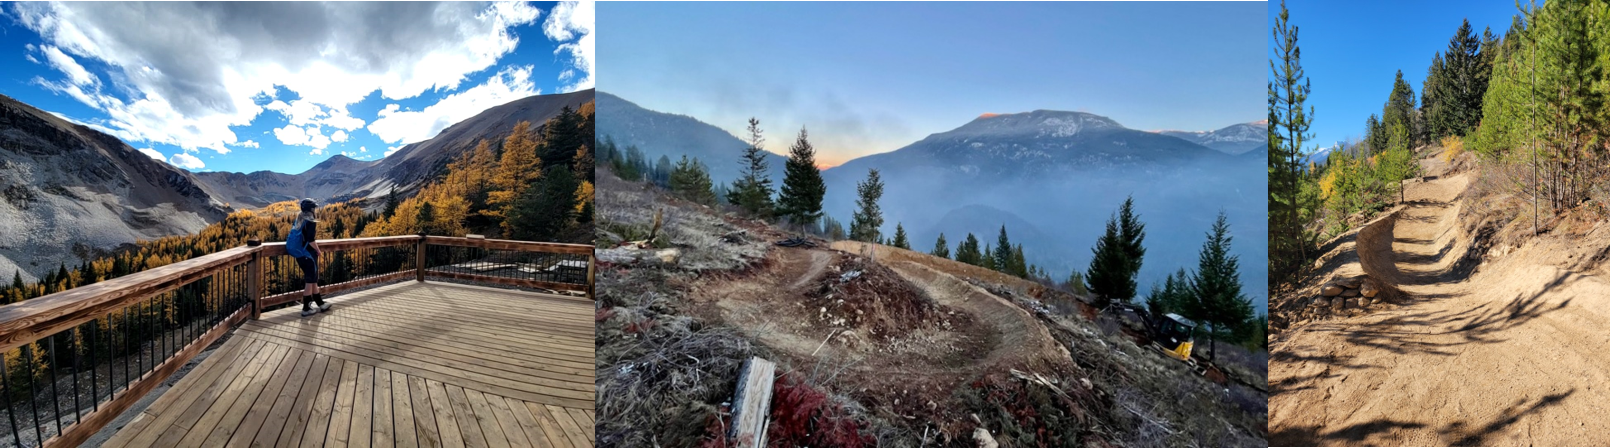 Header Shot of Mountain Bike Trails, Berms and alpine Cabin